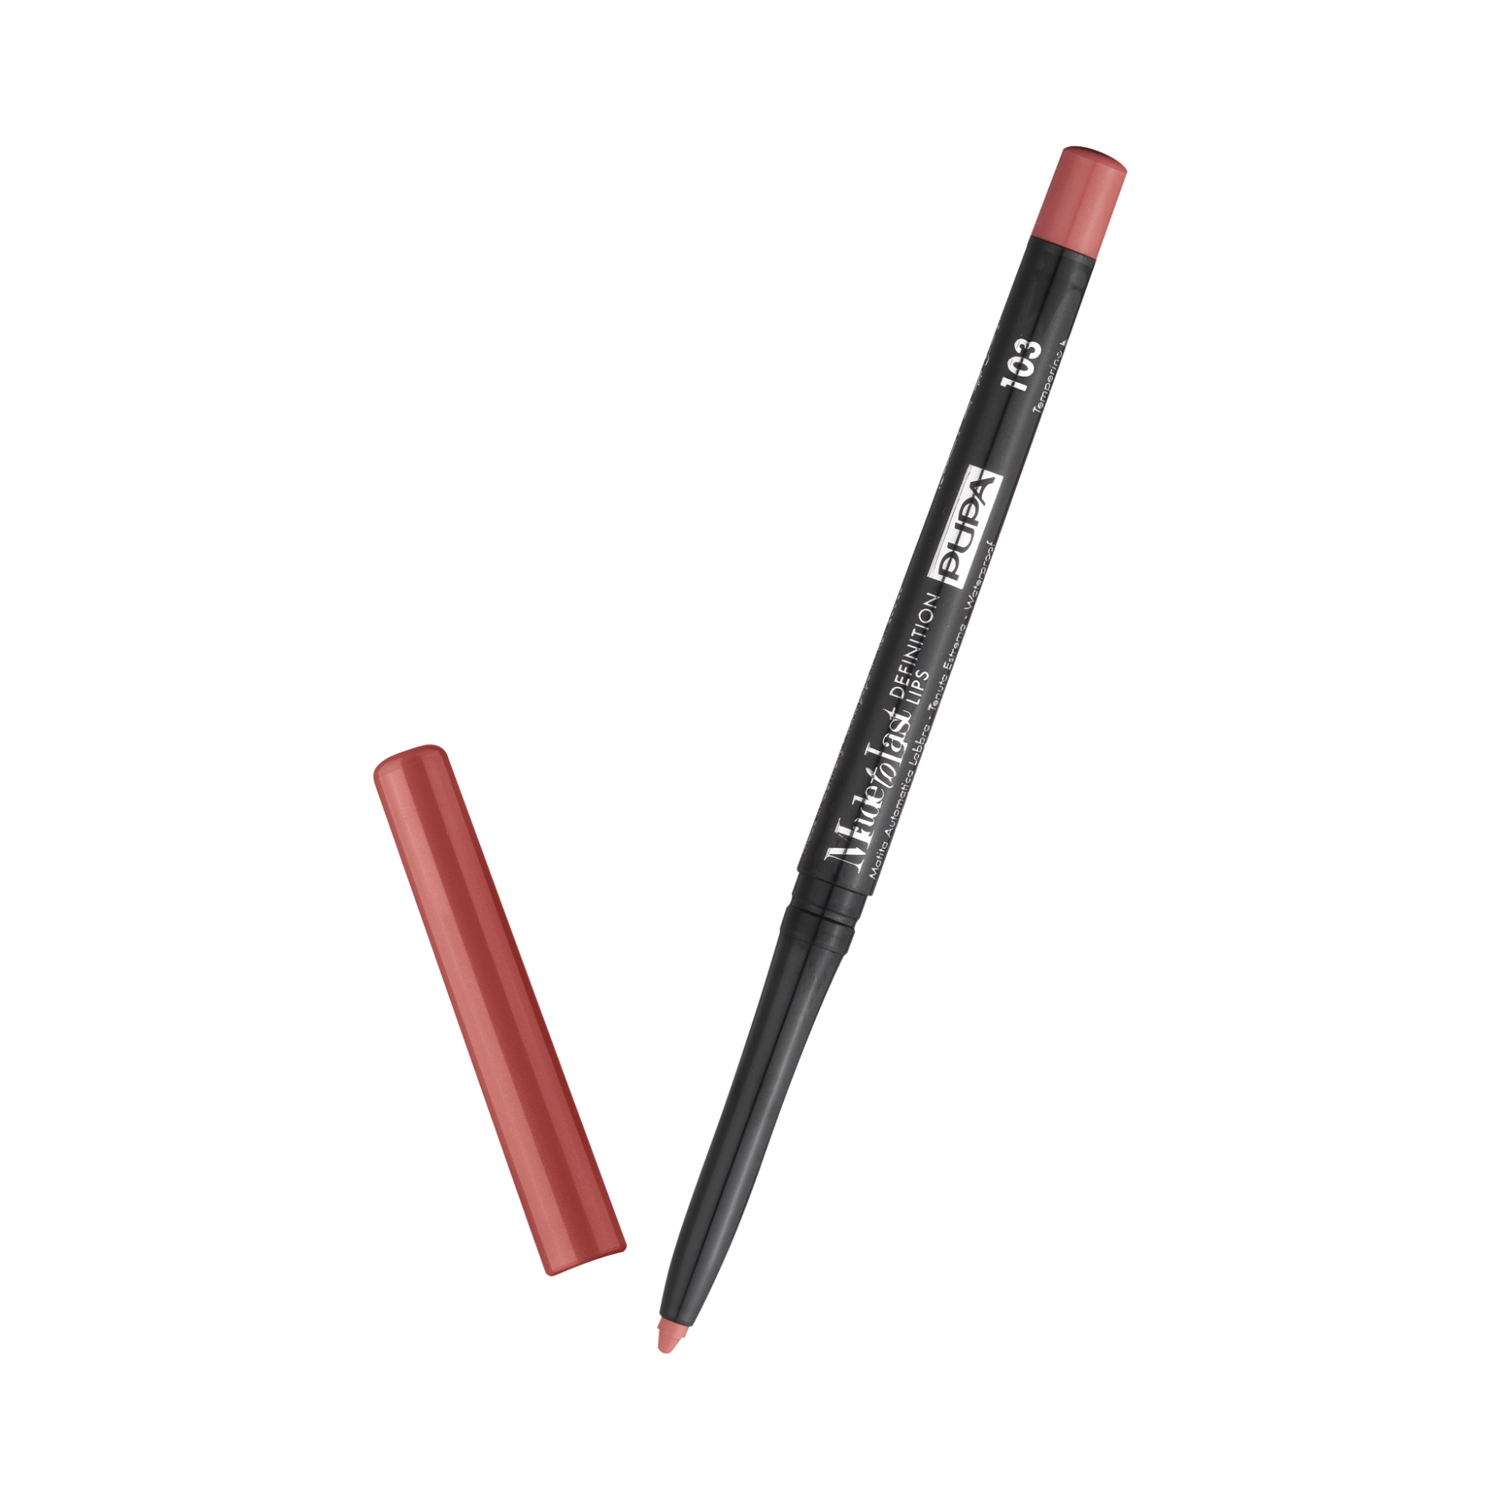 Pupa Milano | Pupa Milano Made To Last Definition Lip Pencil - 103 Apricot Rose (0.35g)